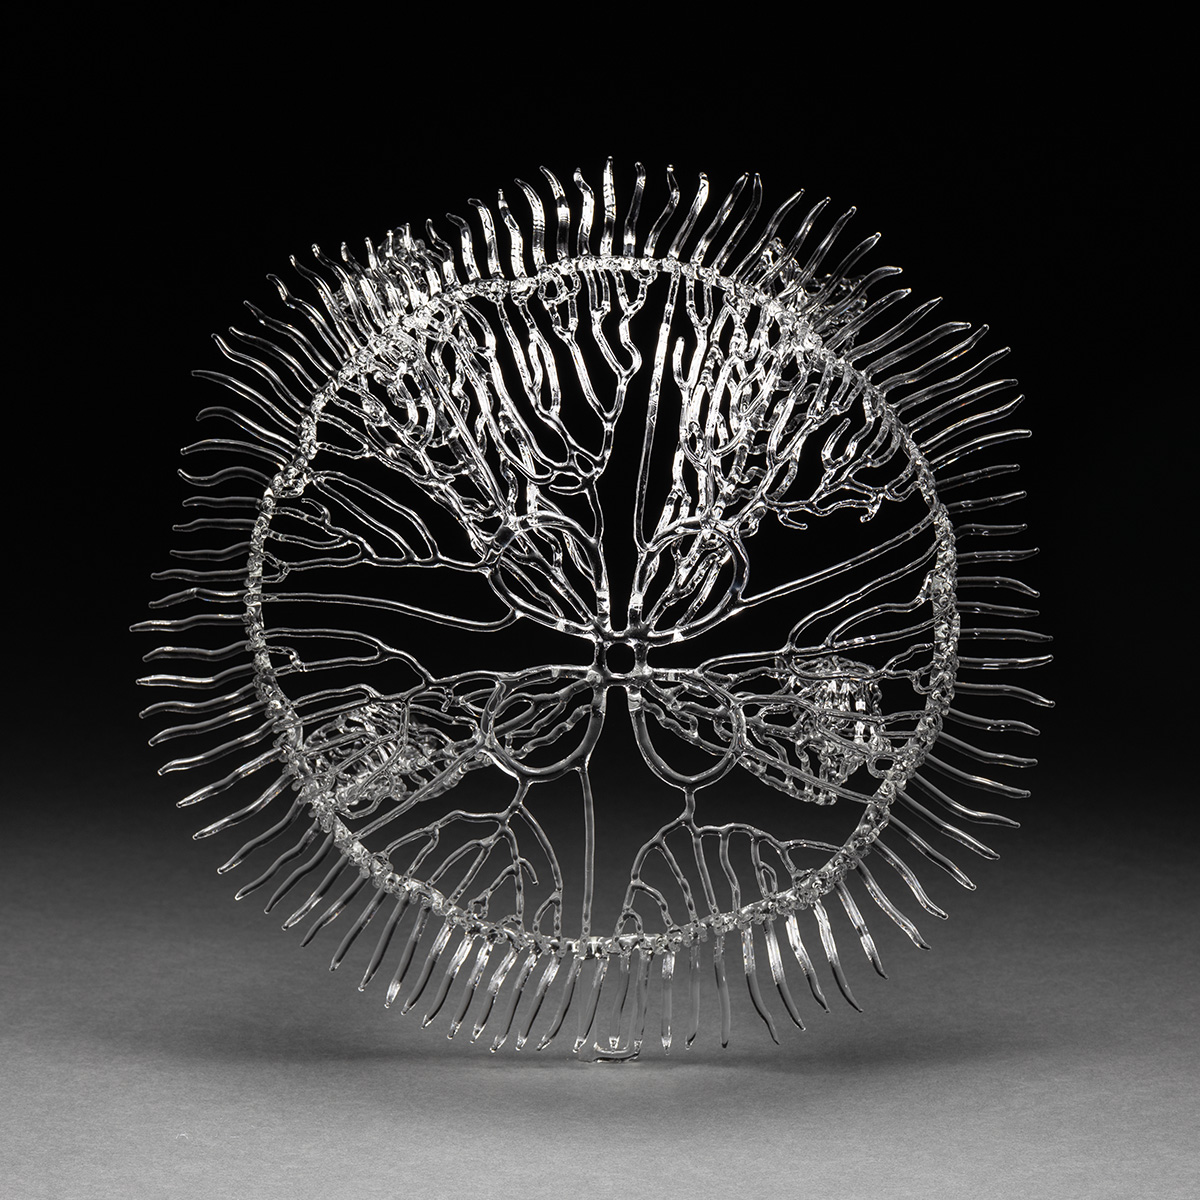 Moon Jellyfish Glass Sculpture,
Flameworked Glass